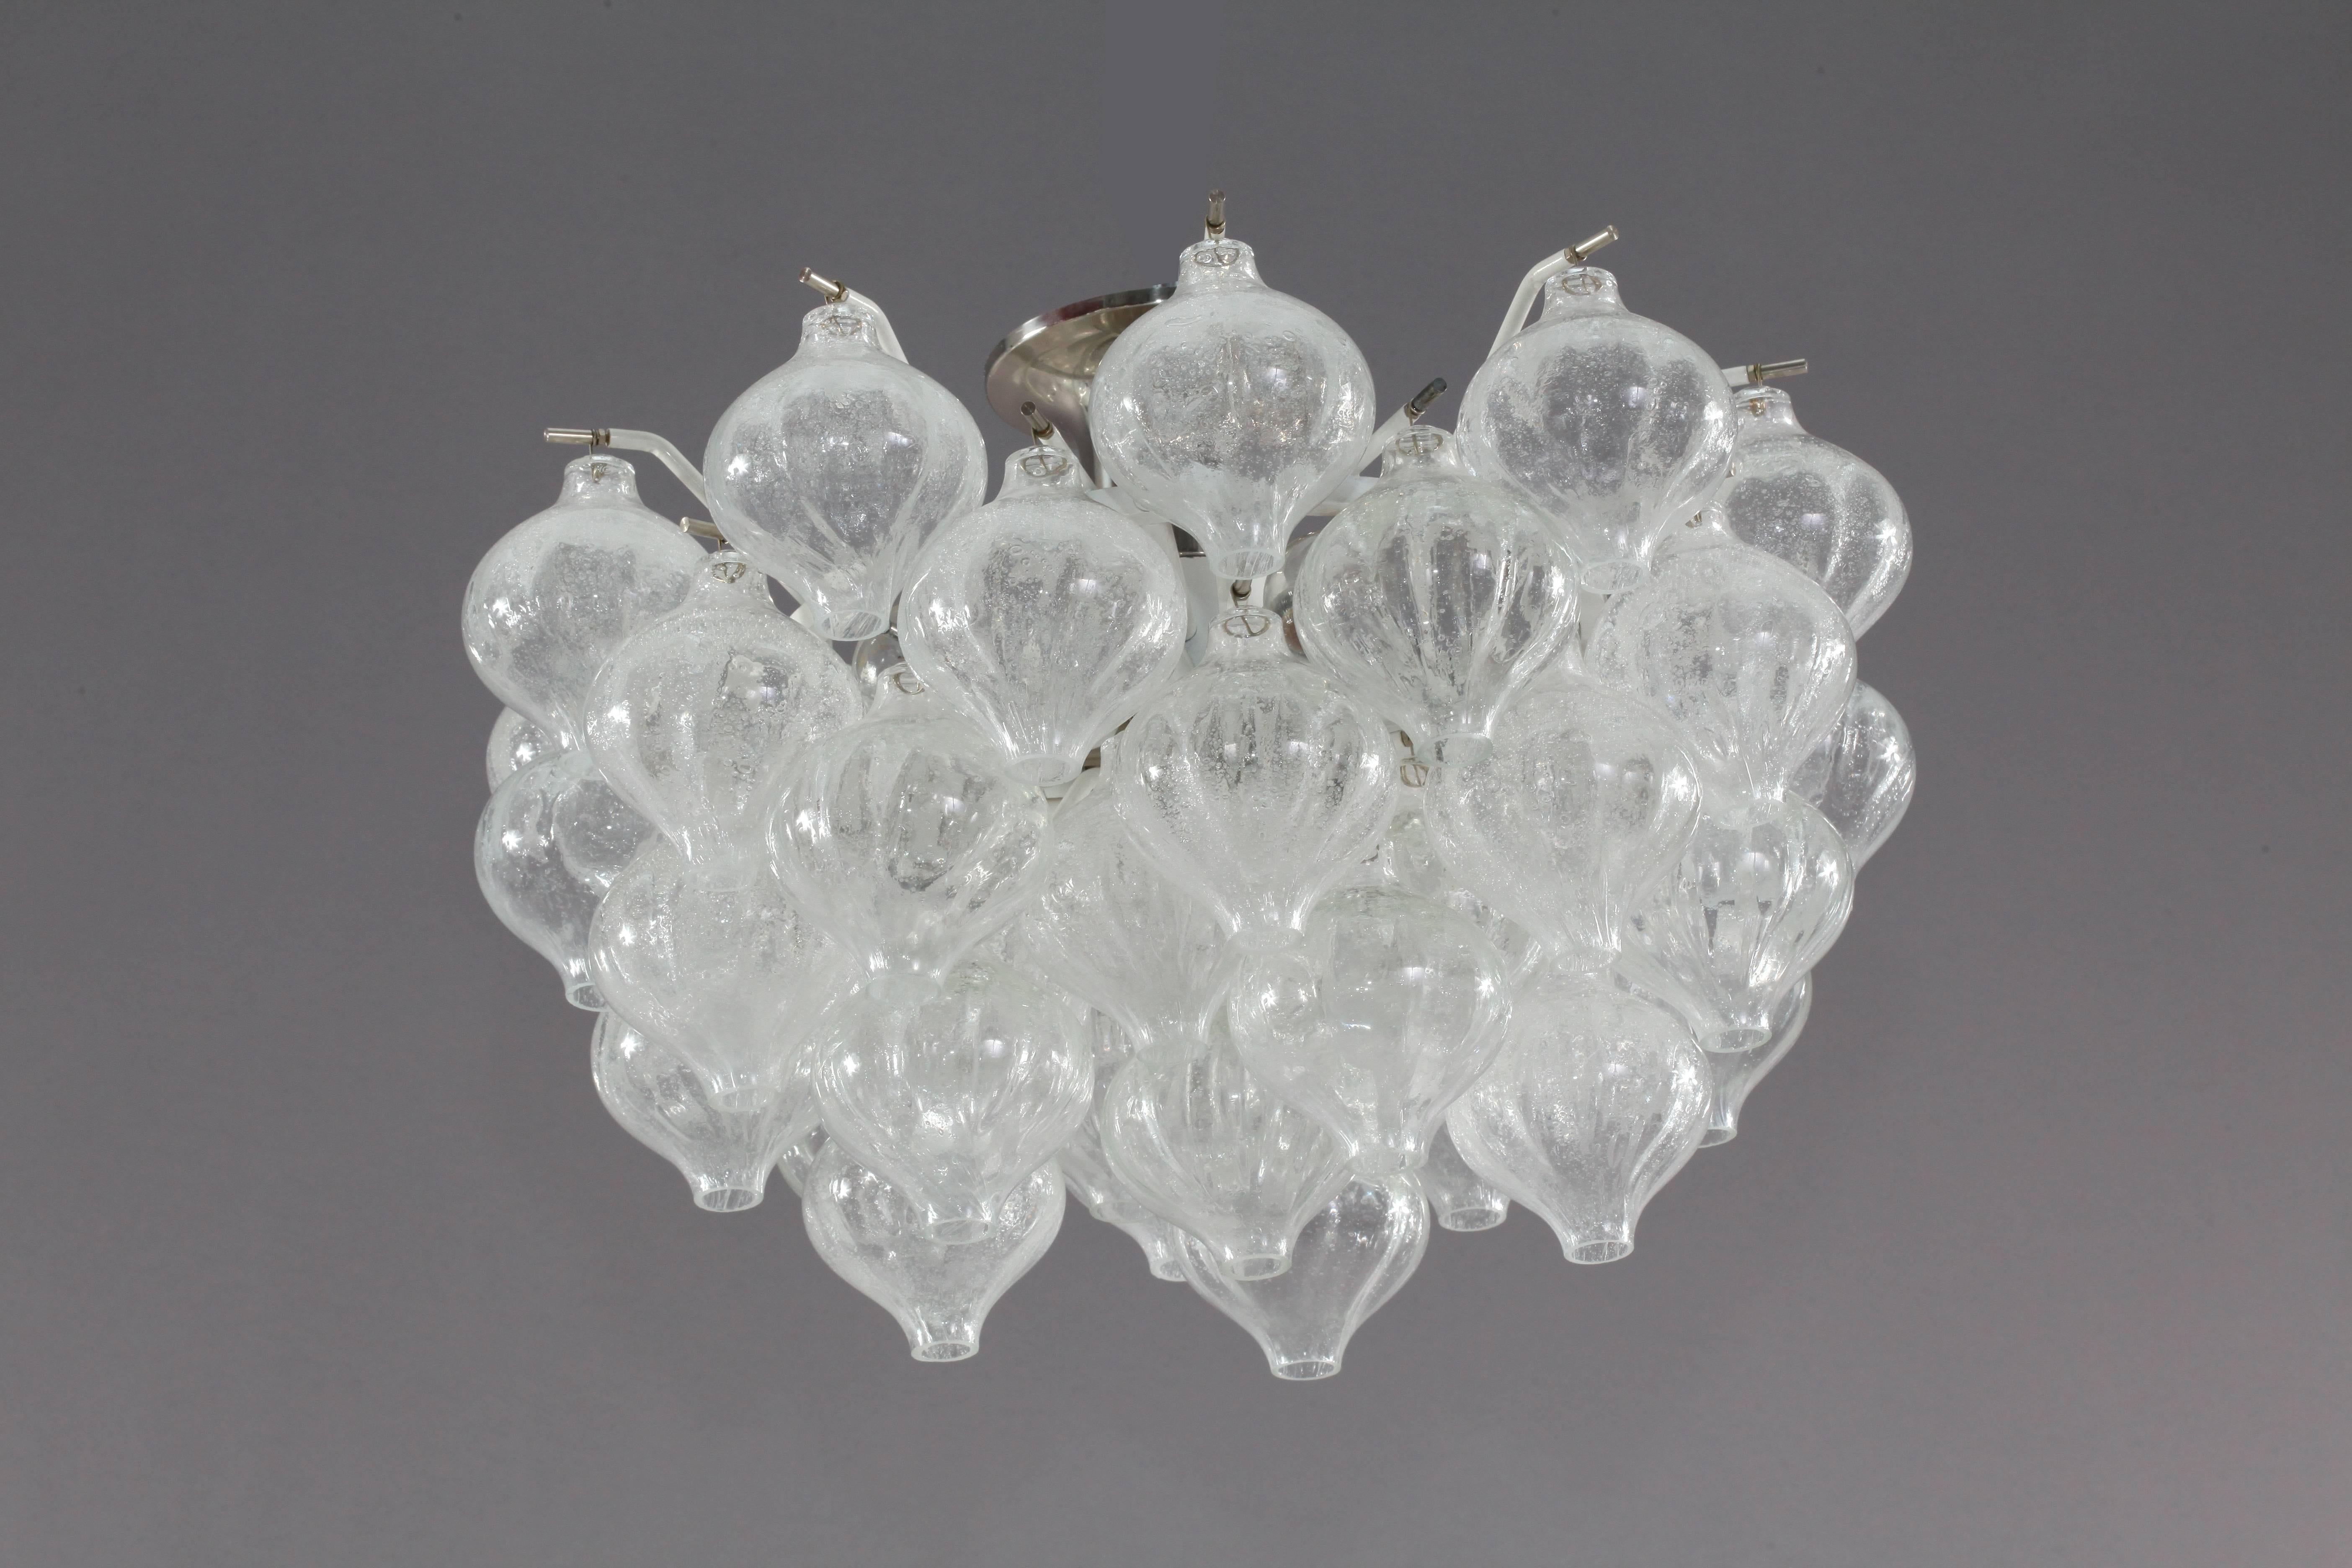 Crystal glass chandelier,
model Tulipan,
designed J.T.Kalmar,
manufactured Kalmar,
Austria, 1960.
Lacquered metal,
crystal glass balls,
12 bulb sockets each max. 40 watt.